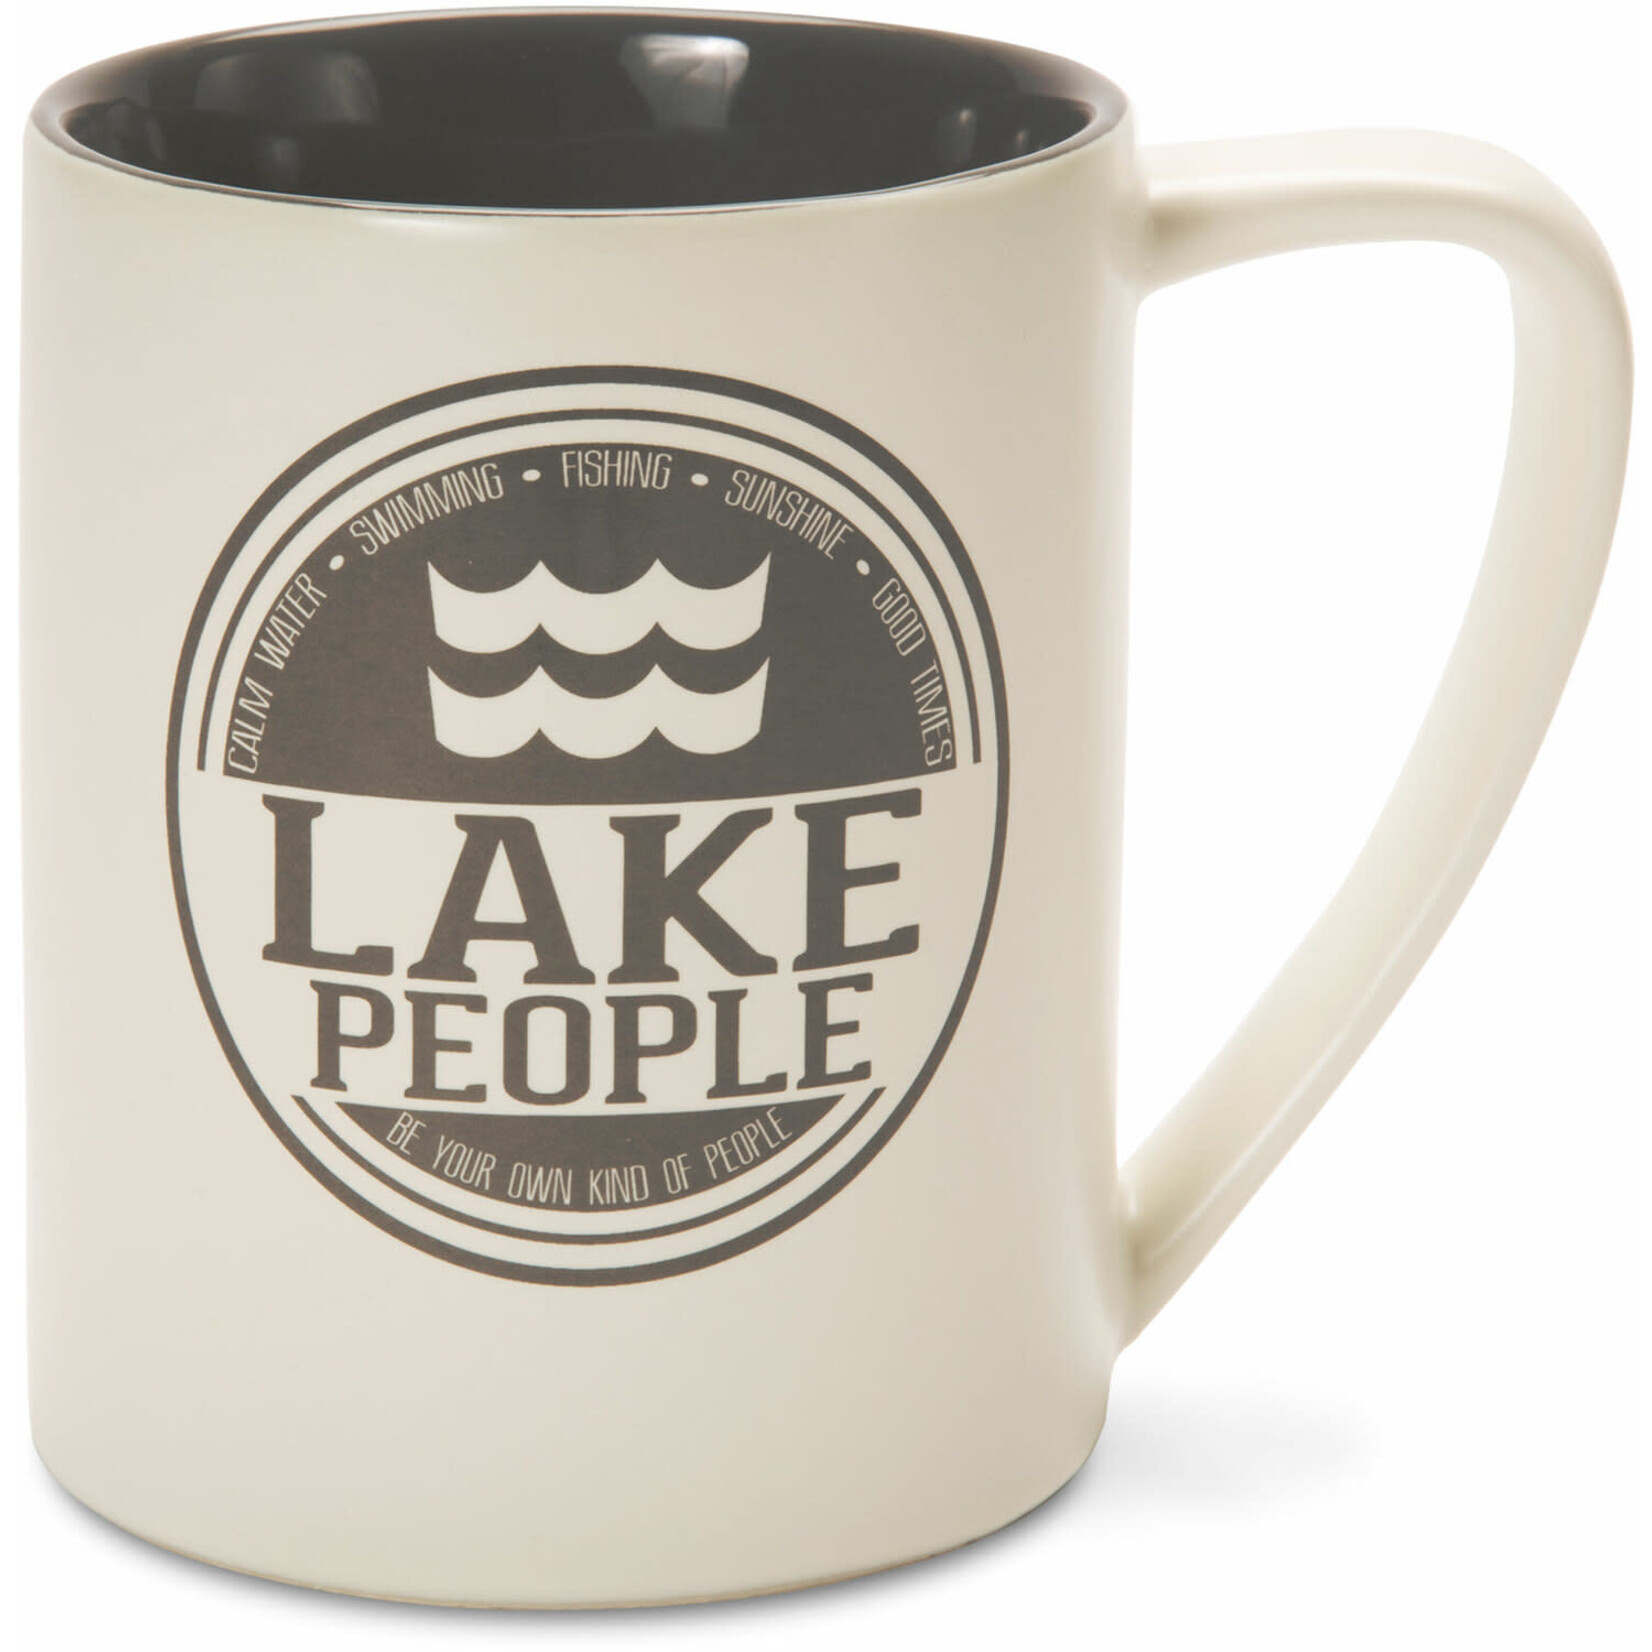 Pavilion Lake People Mug